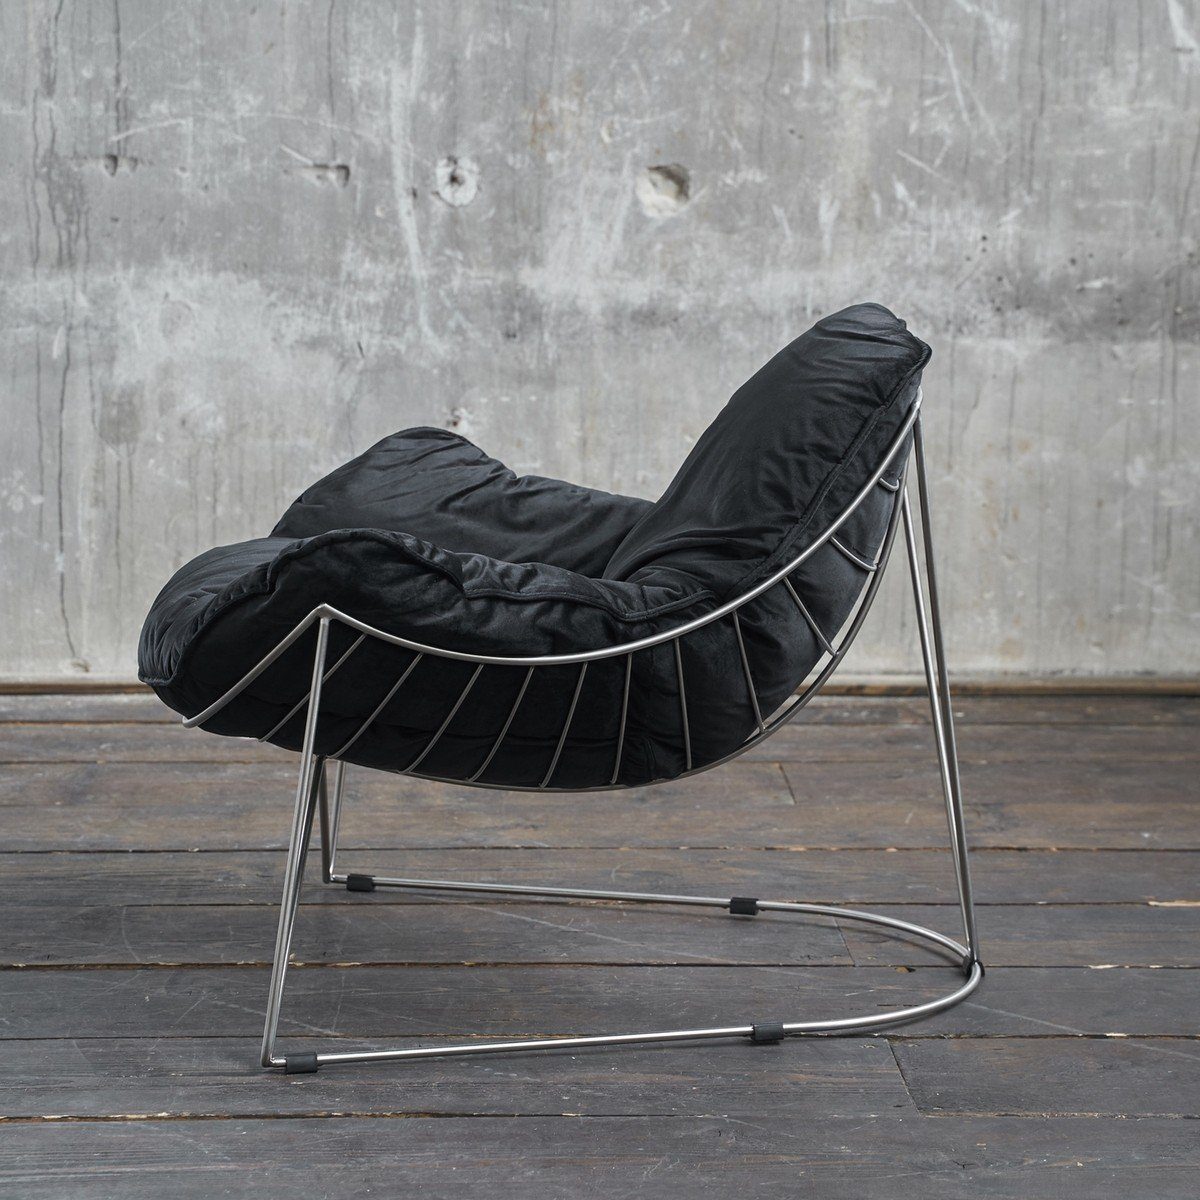 schwarz Sessel KAWOLA Farben Stoff OSCA, verschiedene Relaxsessel